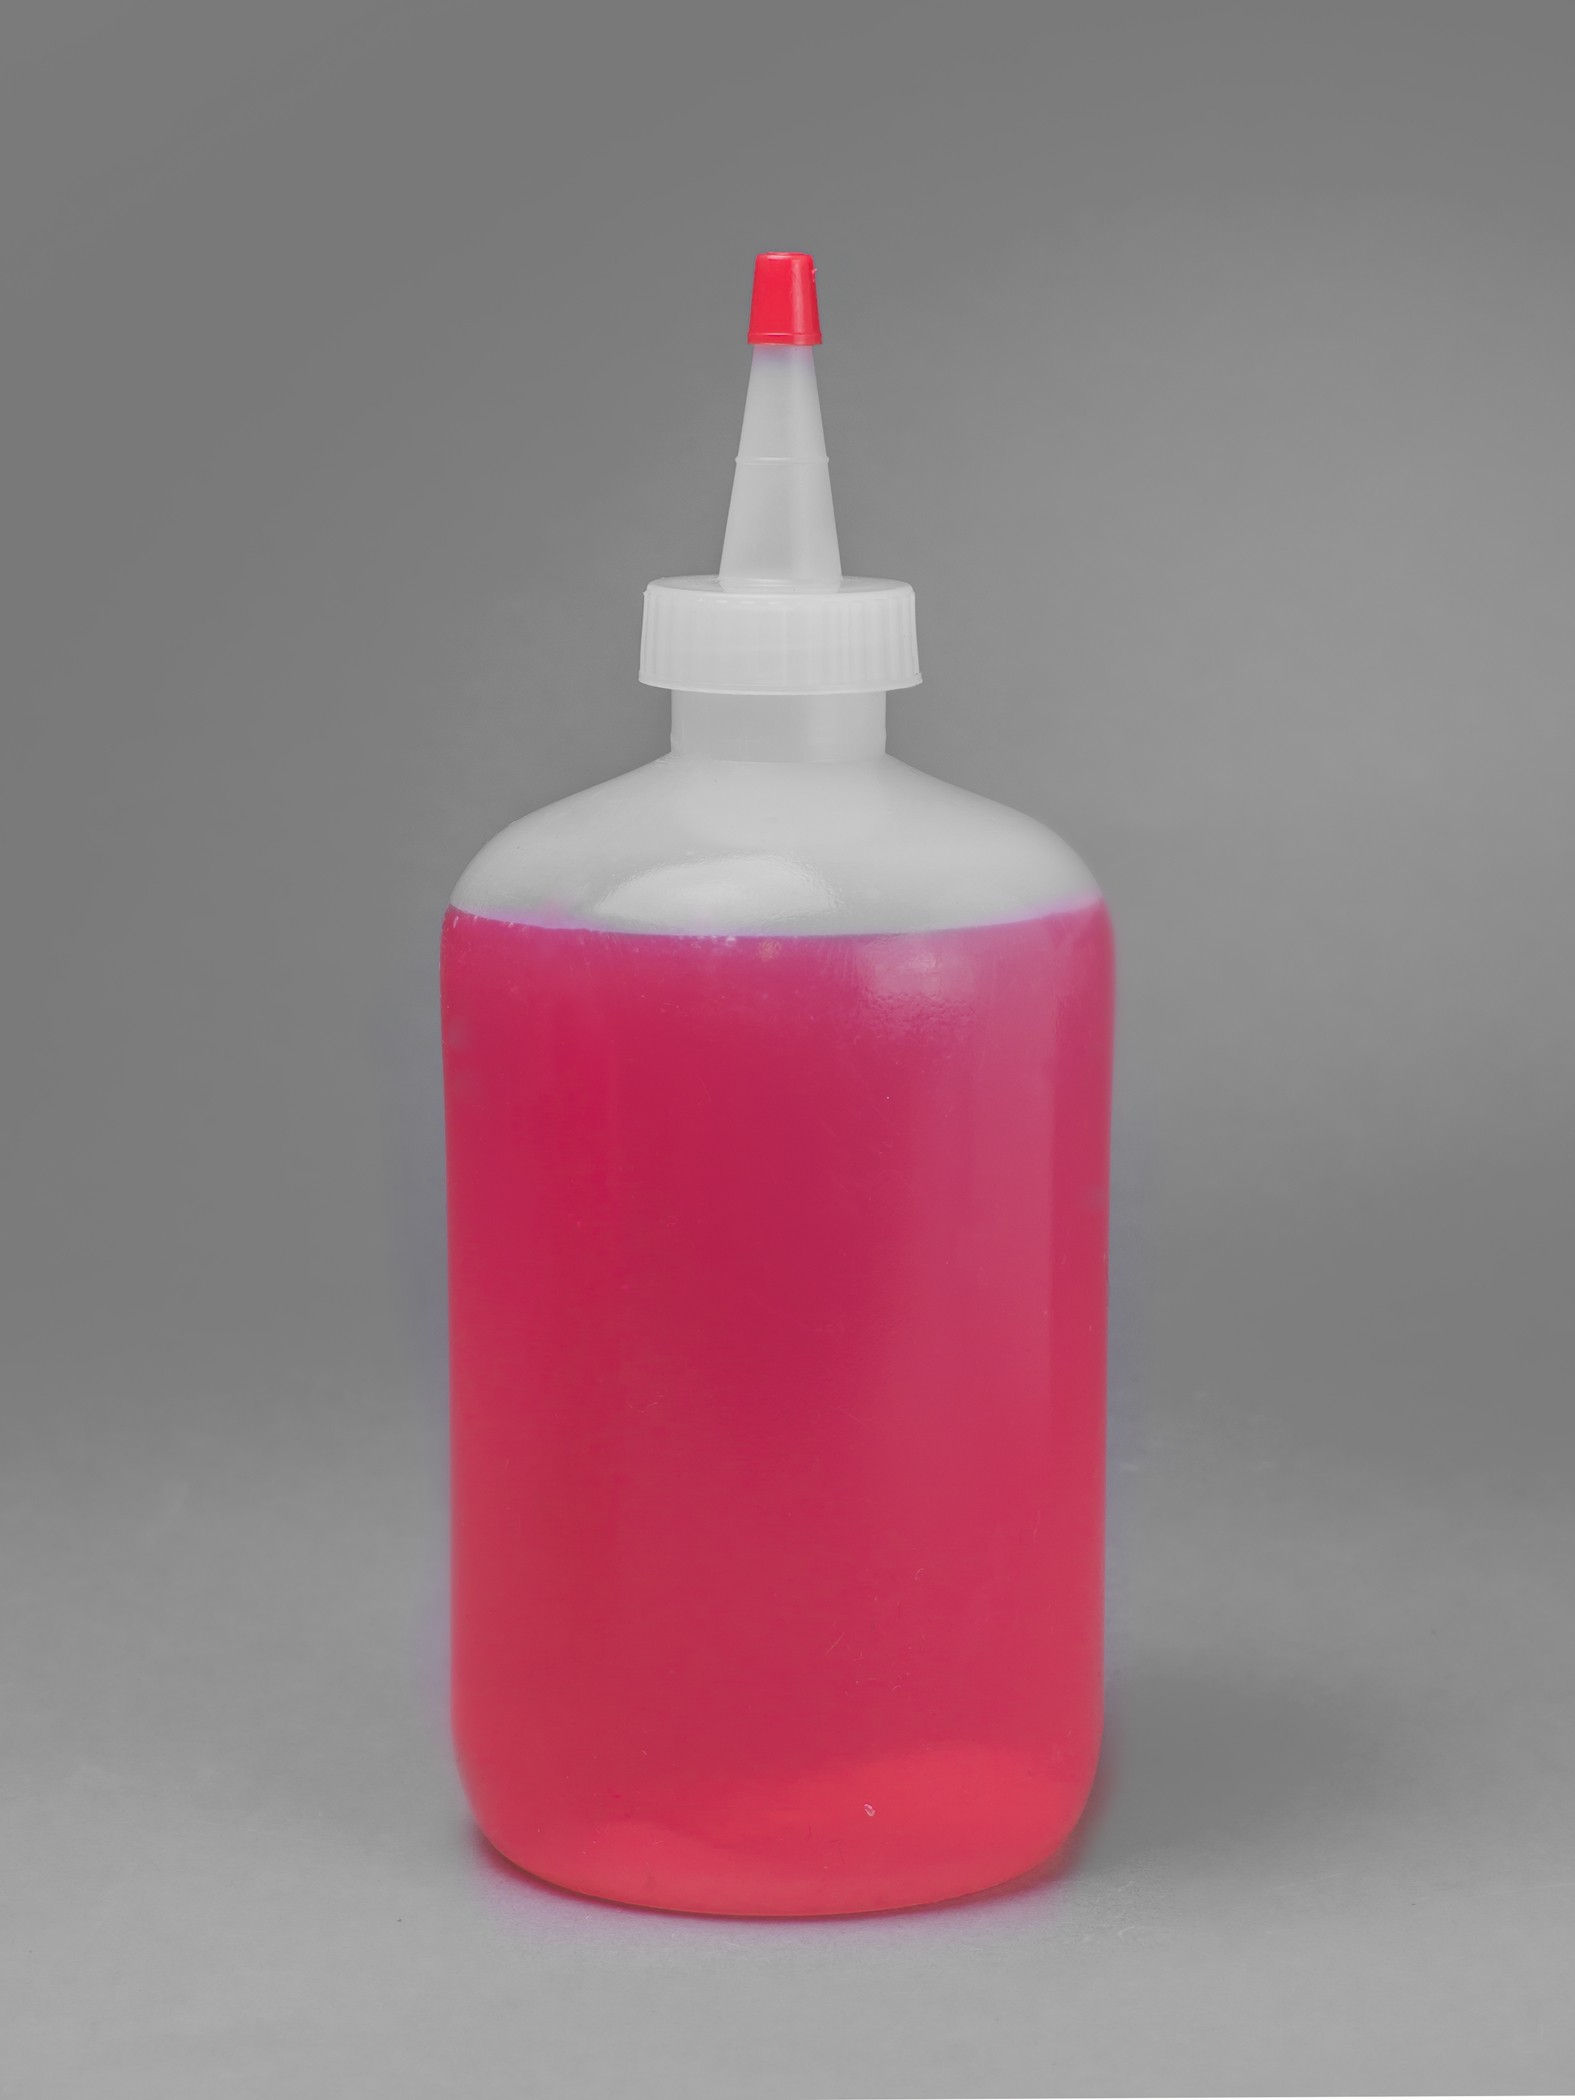 SP Bel-Art Dispensing/Drop 500ml (16oz) Polyethylene Bottles; 28mm Closure (Pack of 12)